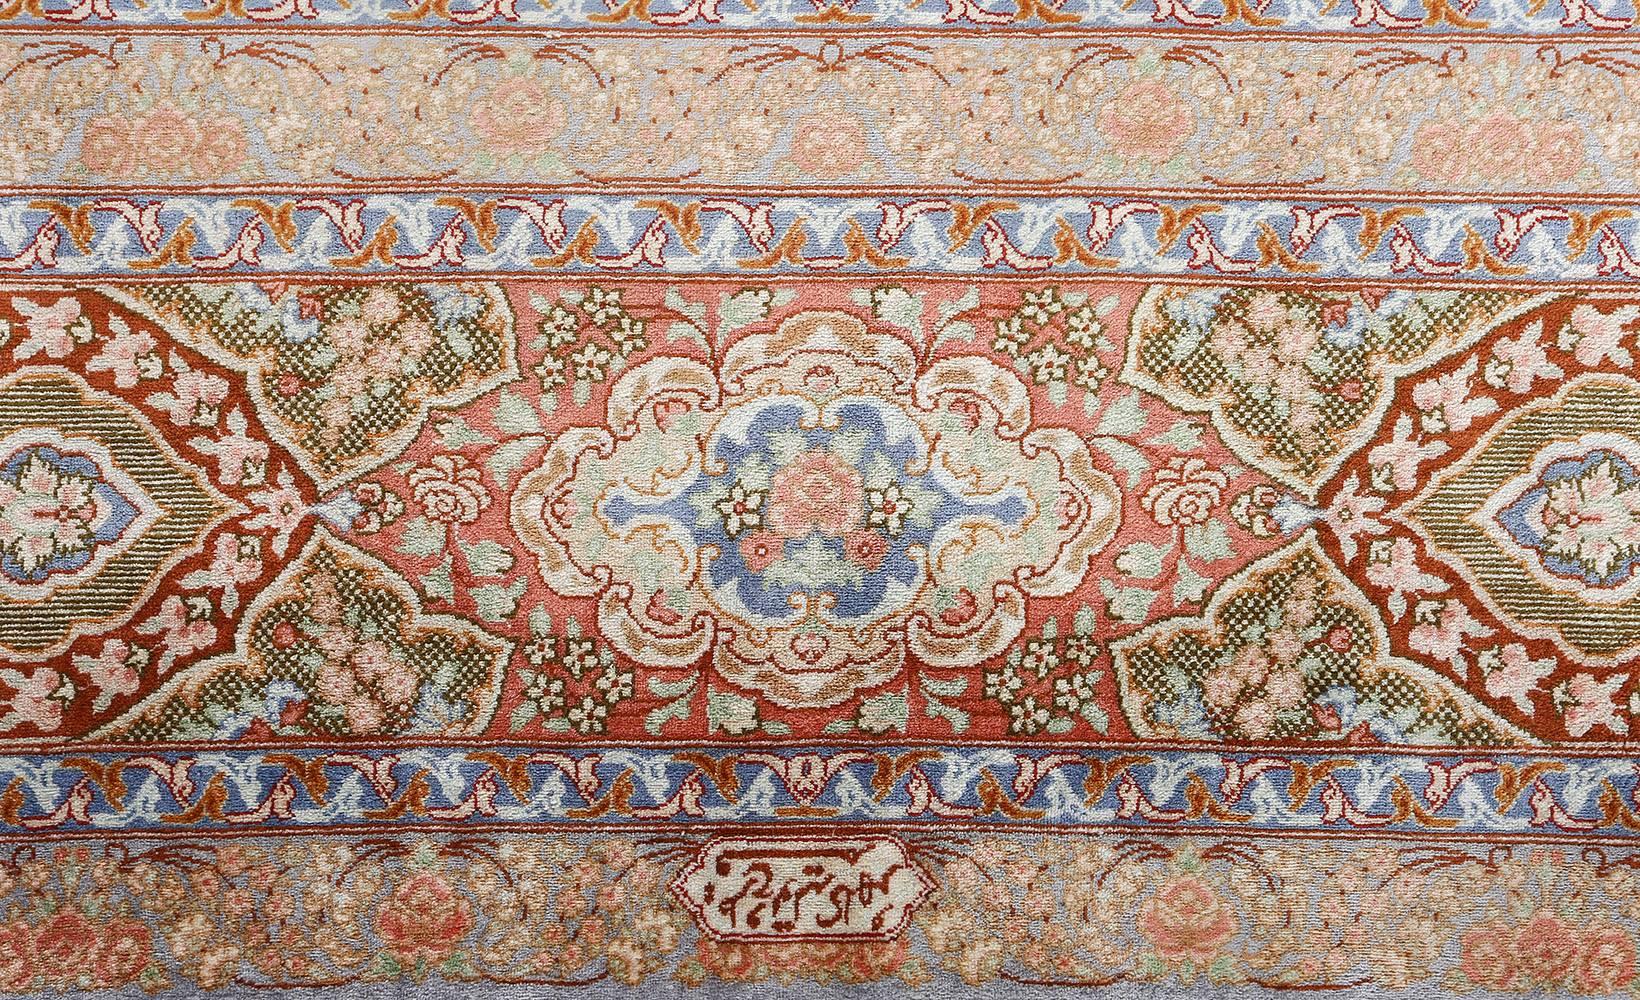 Fine Silk Vintage Qum Persian Rug.Size: 6 ft 6 in x 9 ft 11 in (1.98 m x 3.02 m) 3